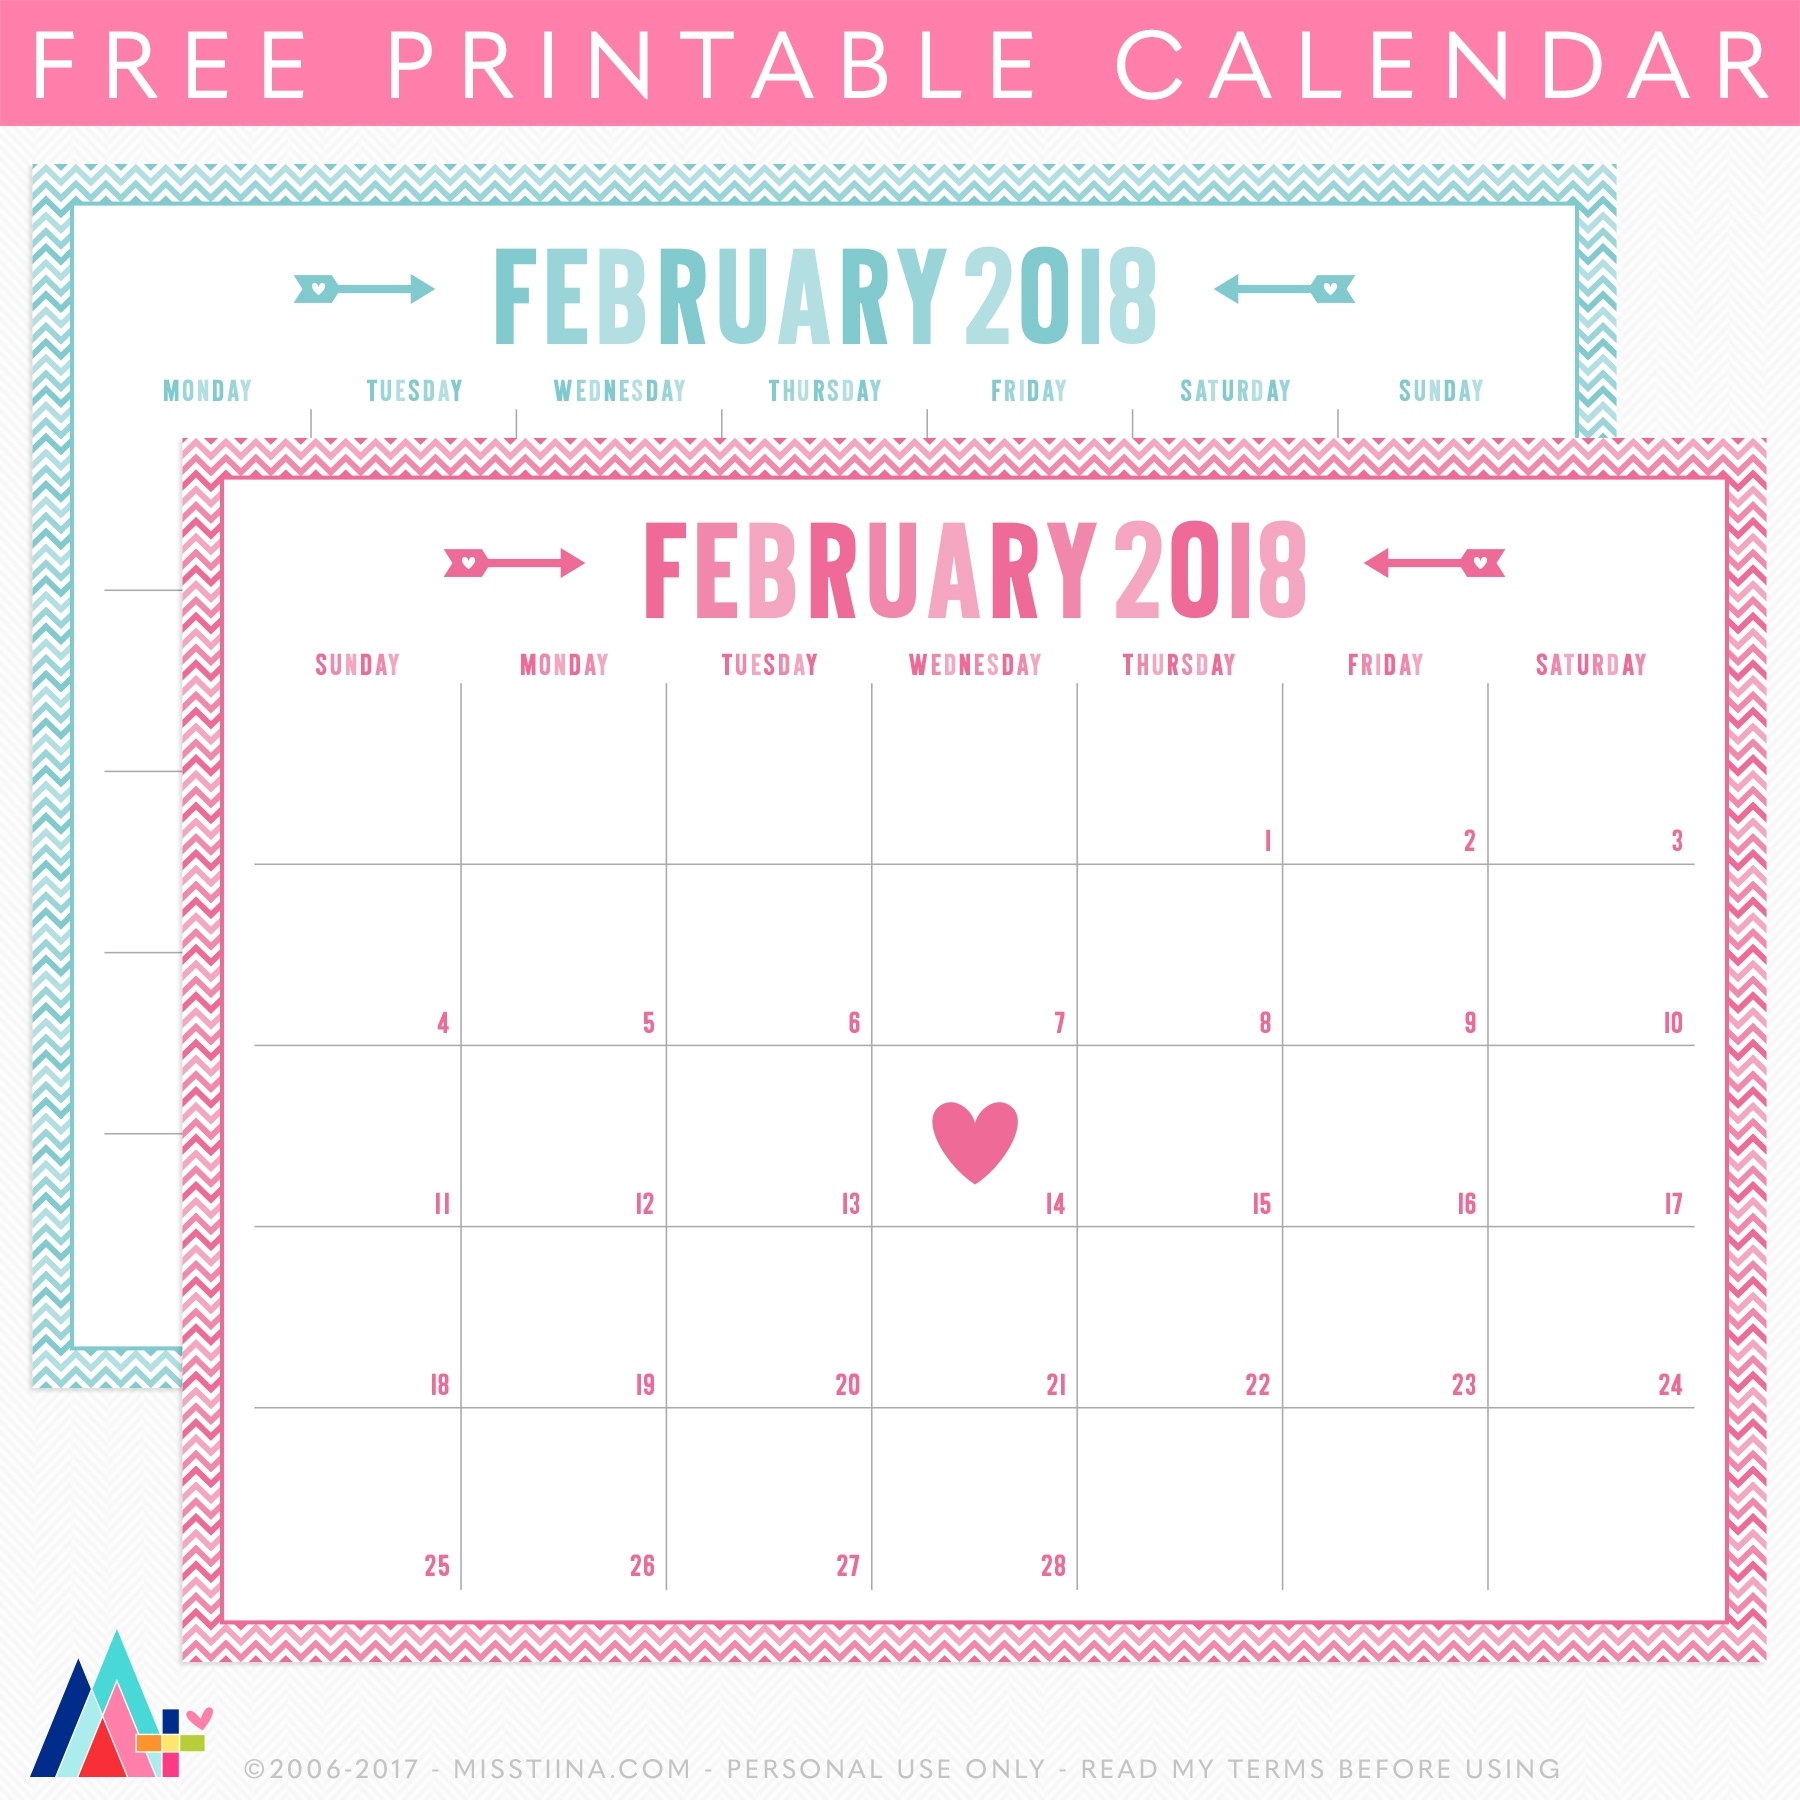 Printable Calendar Holiday Stickers | Printable Calendar 2019 Free Printable Calendar Holiday Stickers